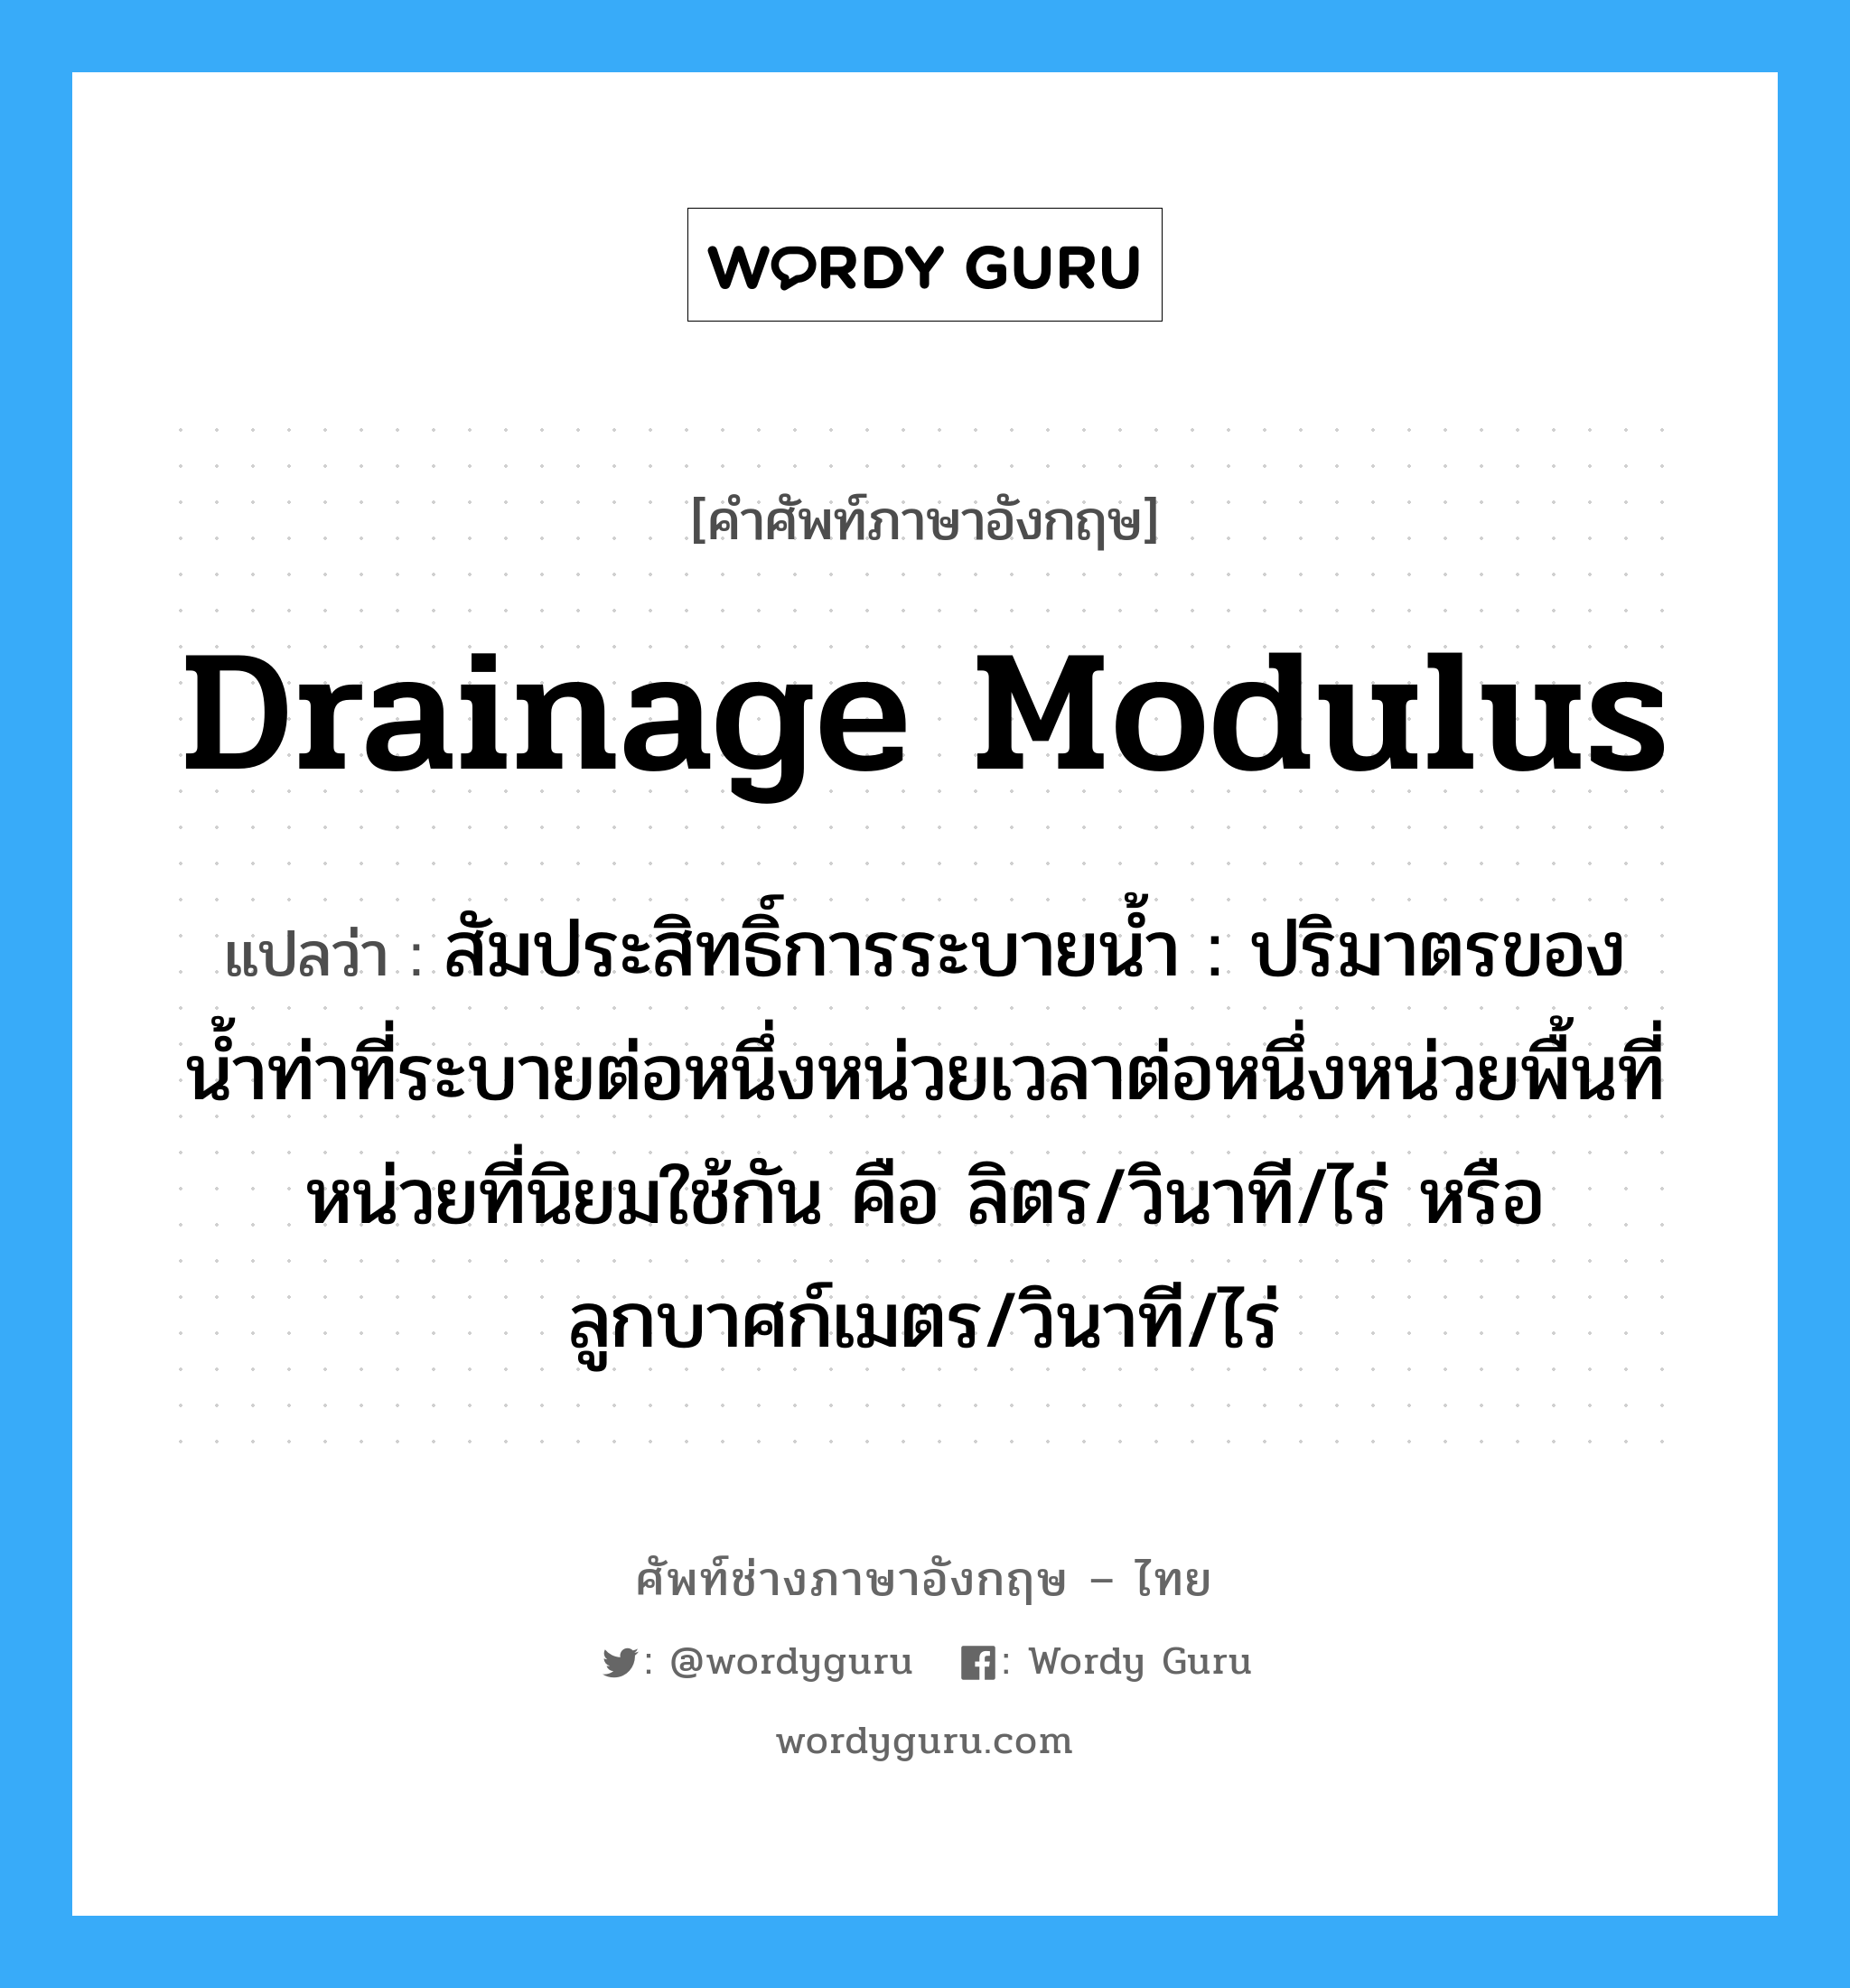 drainage modulus แปลว่า?, คำศัพท์ช่างภาษาอังกฤษ - ไทย drainage modulus คำศัพท์ภาษาอังกฤษ drainage modulus แปลว่า สัมประสิทธิ์การระบายน้ำ : ปริมาตรของน้ำท่าที่ระบายต่อหนึ่งหน่วยเวลาต่อหนึ่งหน่วยพื้นที่หน่วยที่นิยมใช้กัน คือ ลิตร/วินาที/ไร่ หรือ ลูกบาศก์เมตร/วินาที/ไร่